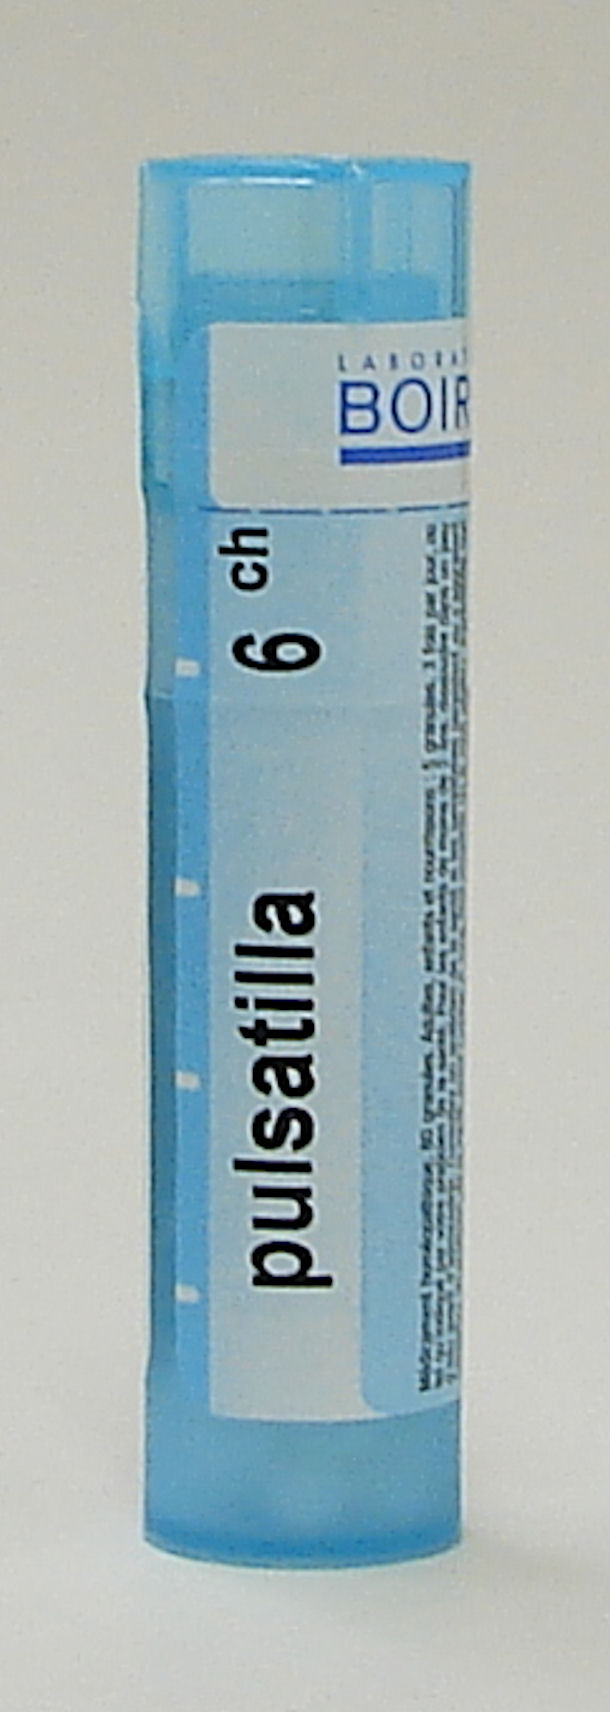 Pulsatilla, 6 ch (Boiron)